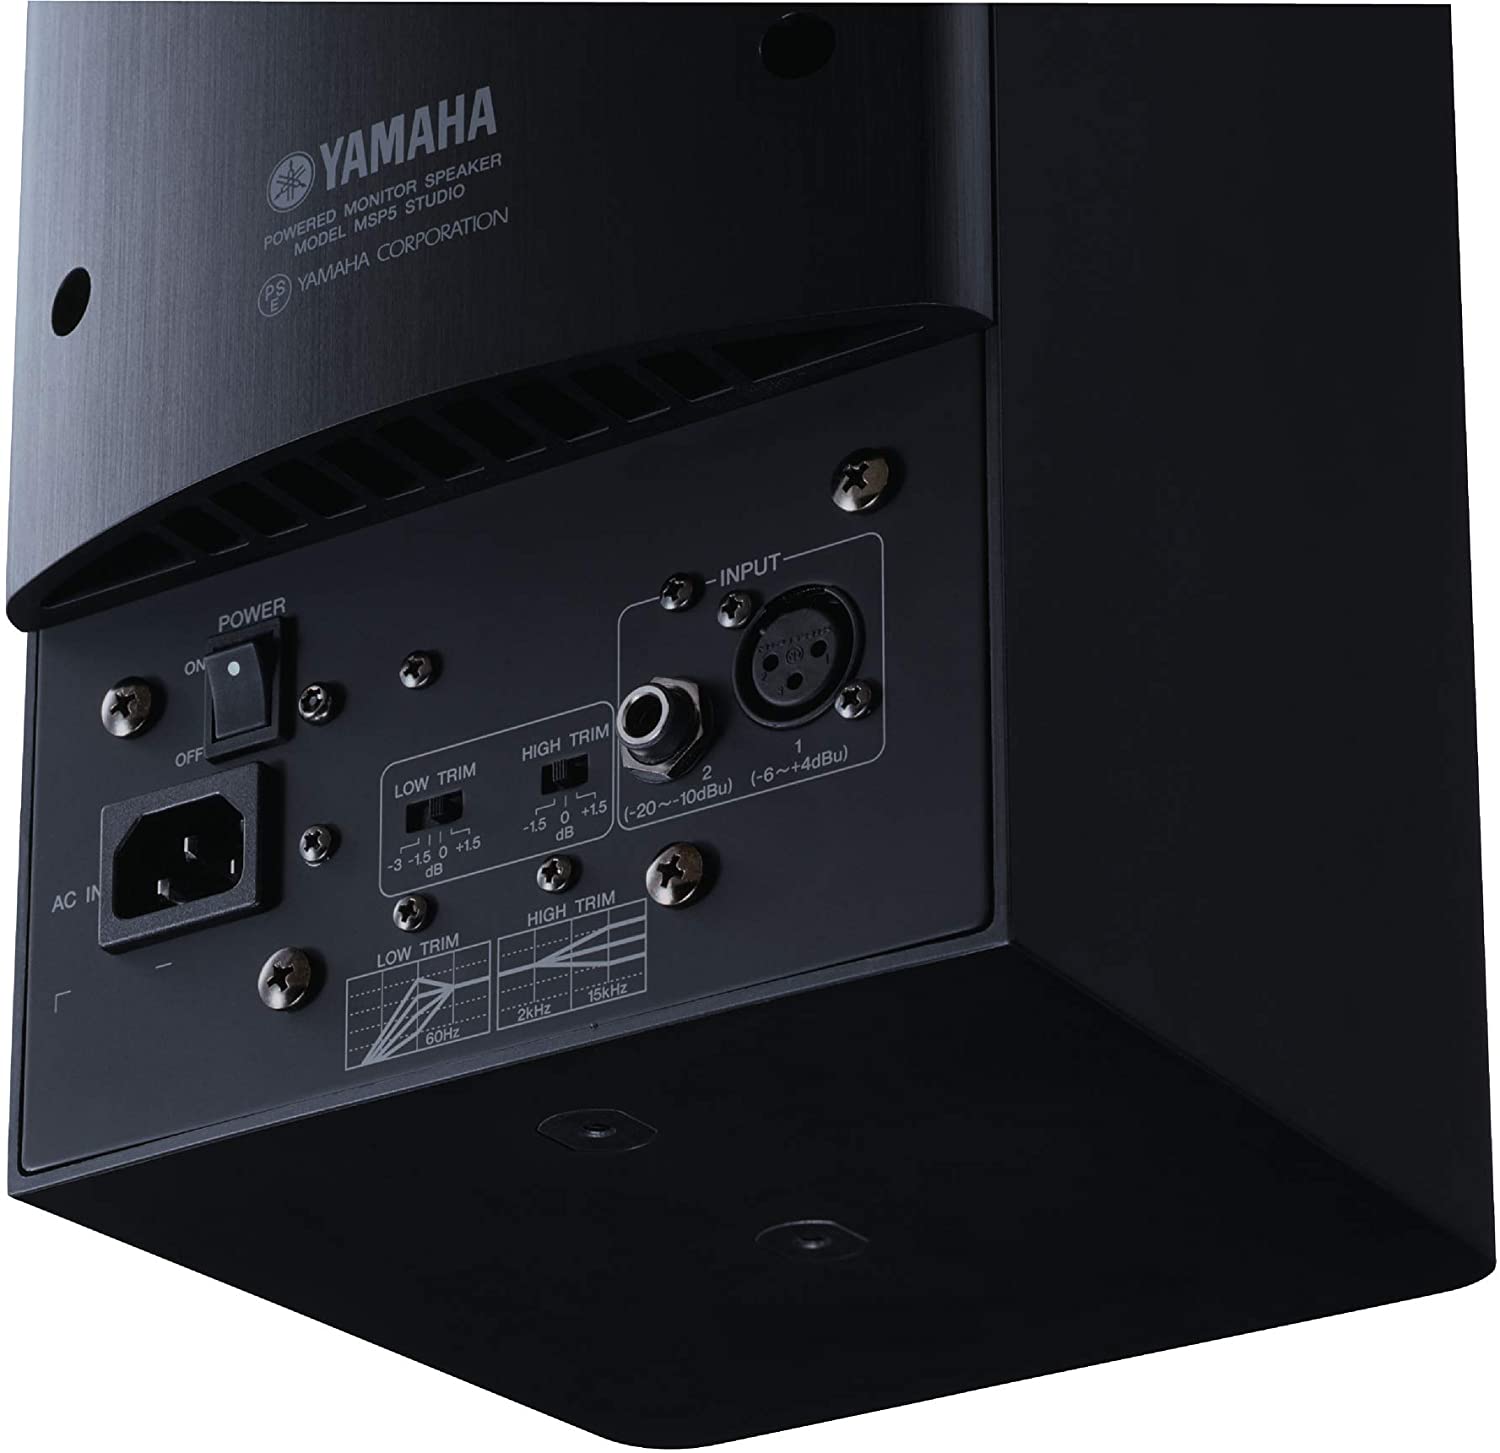 Yamaha MSP5 Studio - Interfaces